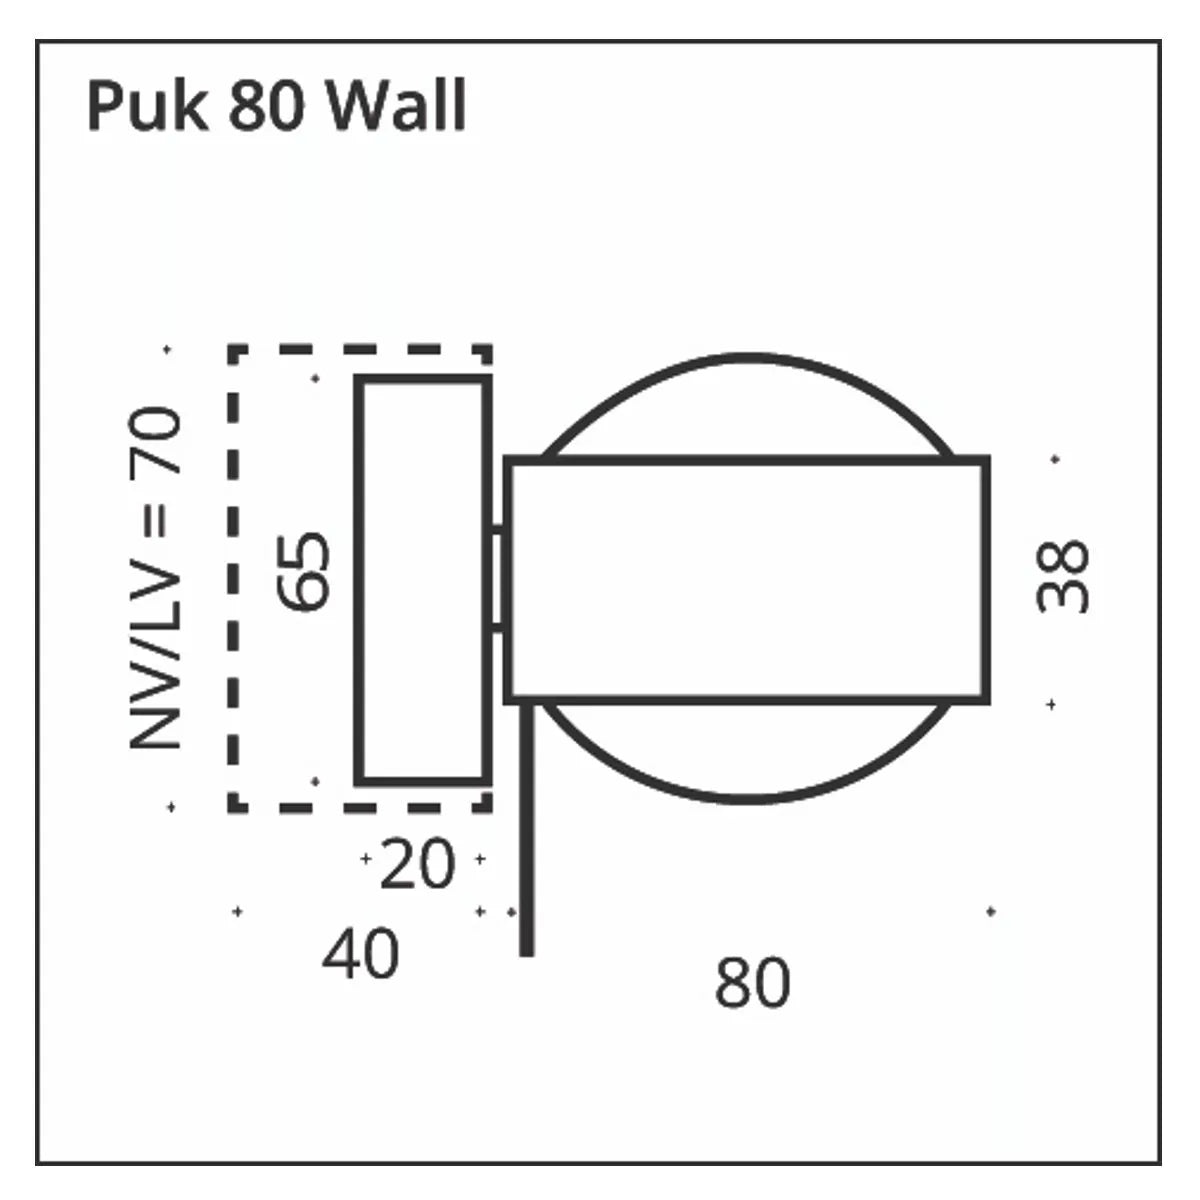 Puk! 80 wall LED Avantgarde Top-light